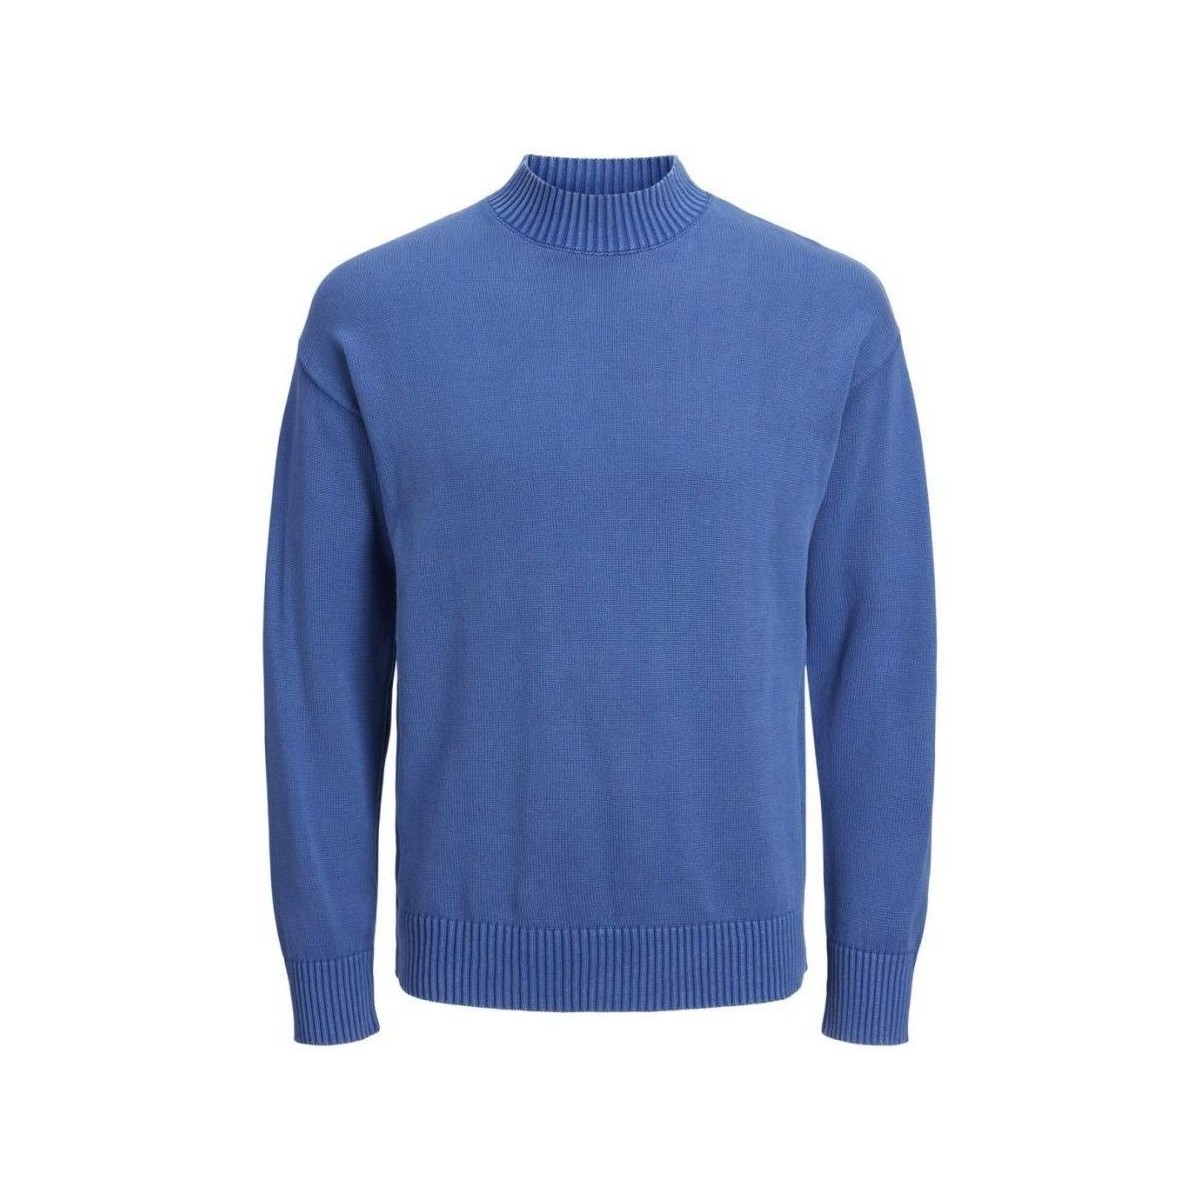 Kleidung Herren Pullover Jack & Jones 12216176 JORWILLIAM-NAUTICAL BLUE Blau